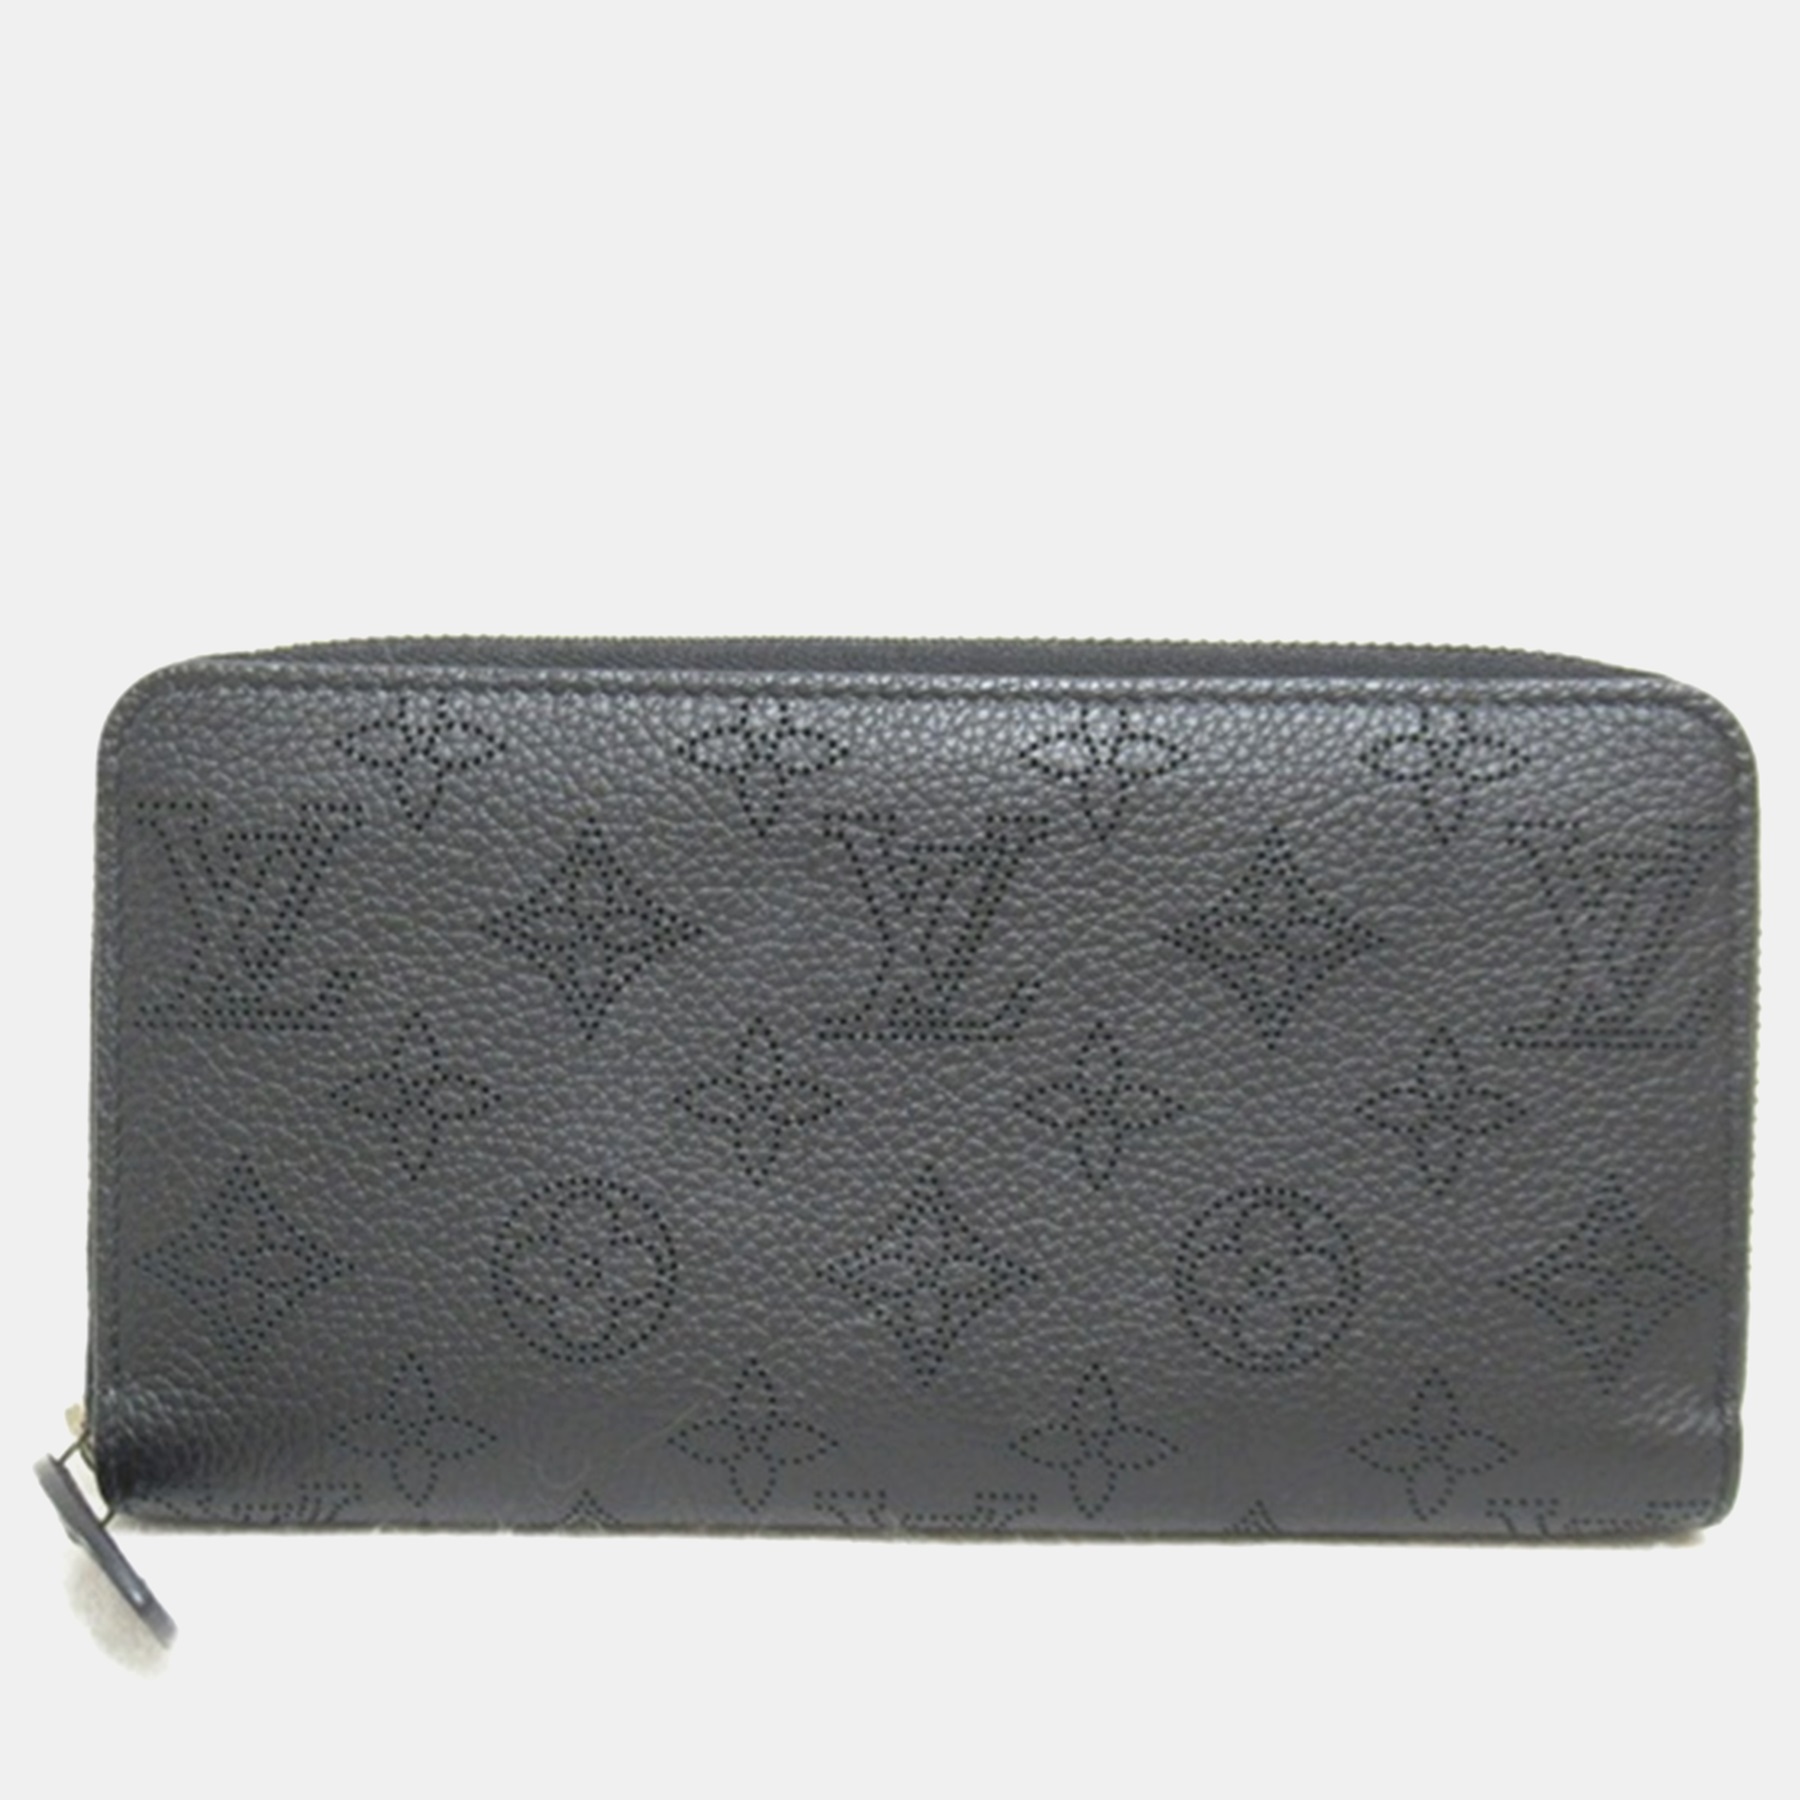 Louis vuitton black leather zippy wallet